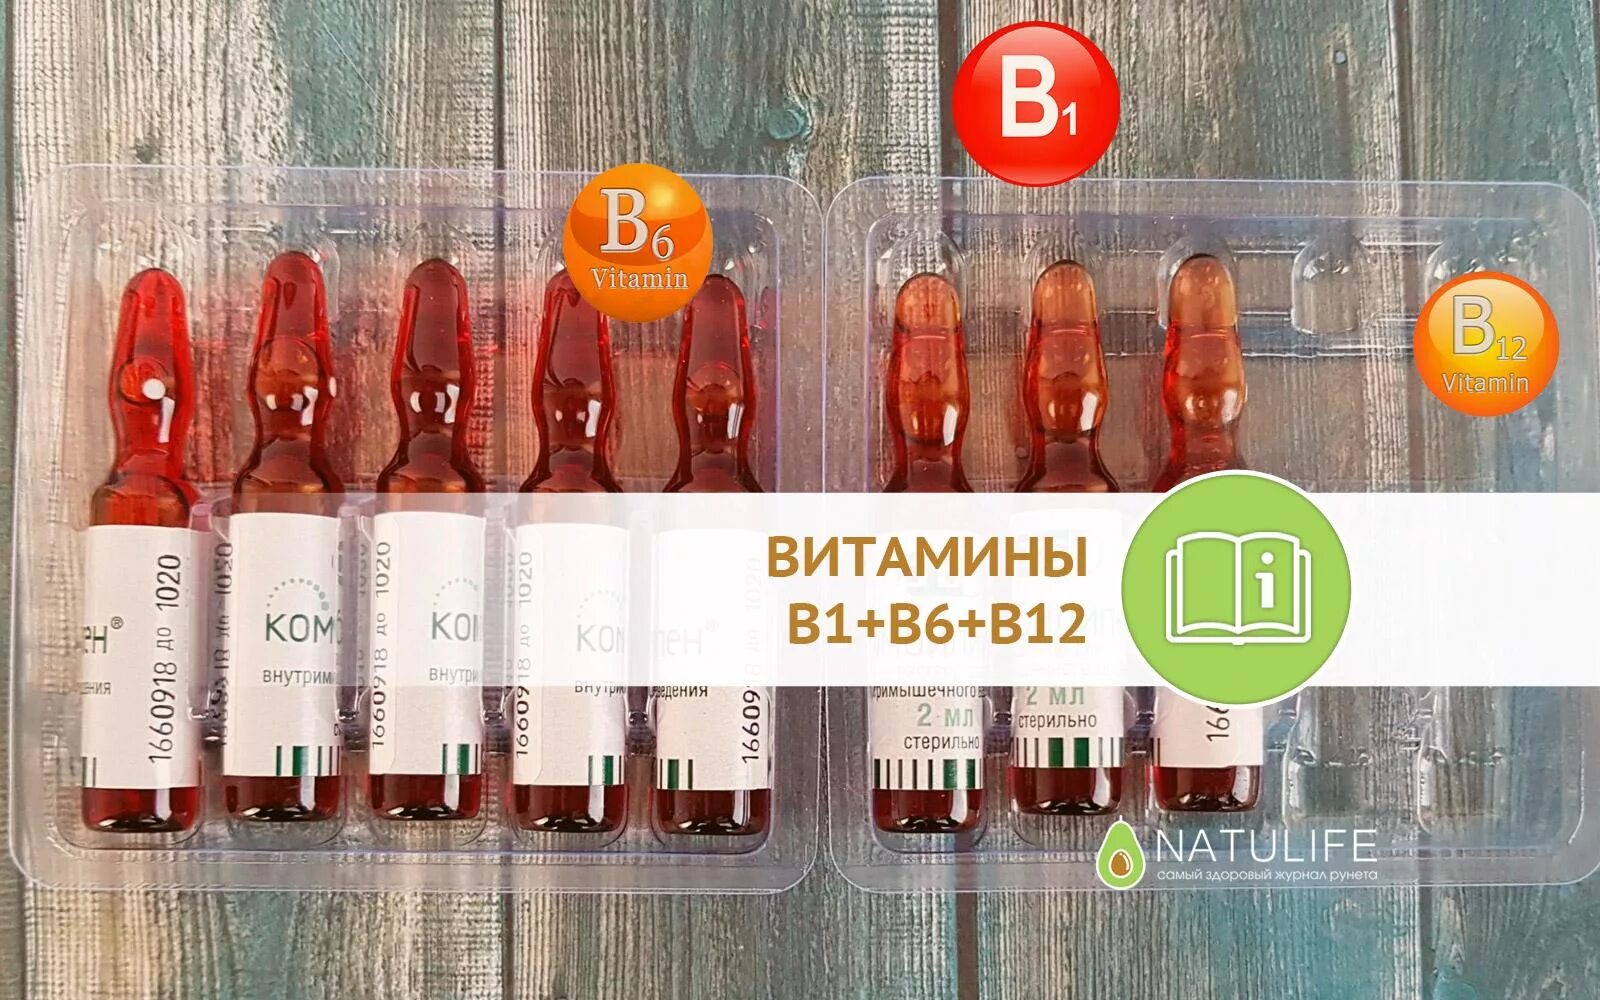 Уколы б 1 б 6. Витамины б1 б6 уколы. Комплекс витаминов б1 б6 б12 в ампулах. B1 b6 b12 витамины в ампулах JN pfgjz. Комплекс б1 б6 б12 уколы витамины.